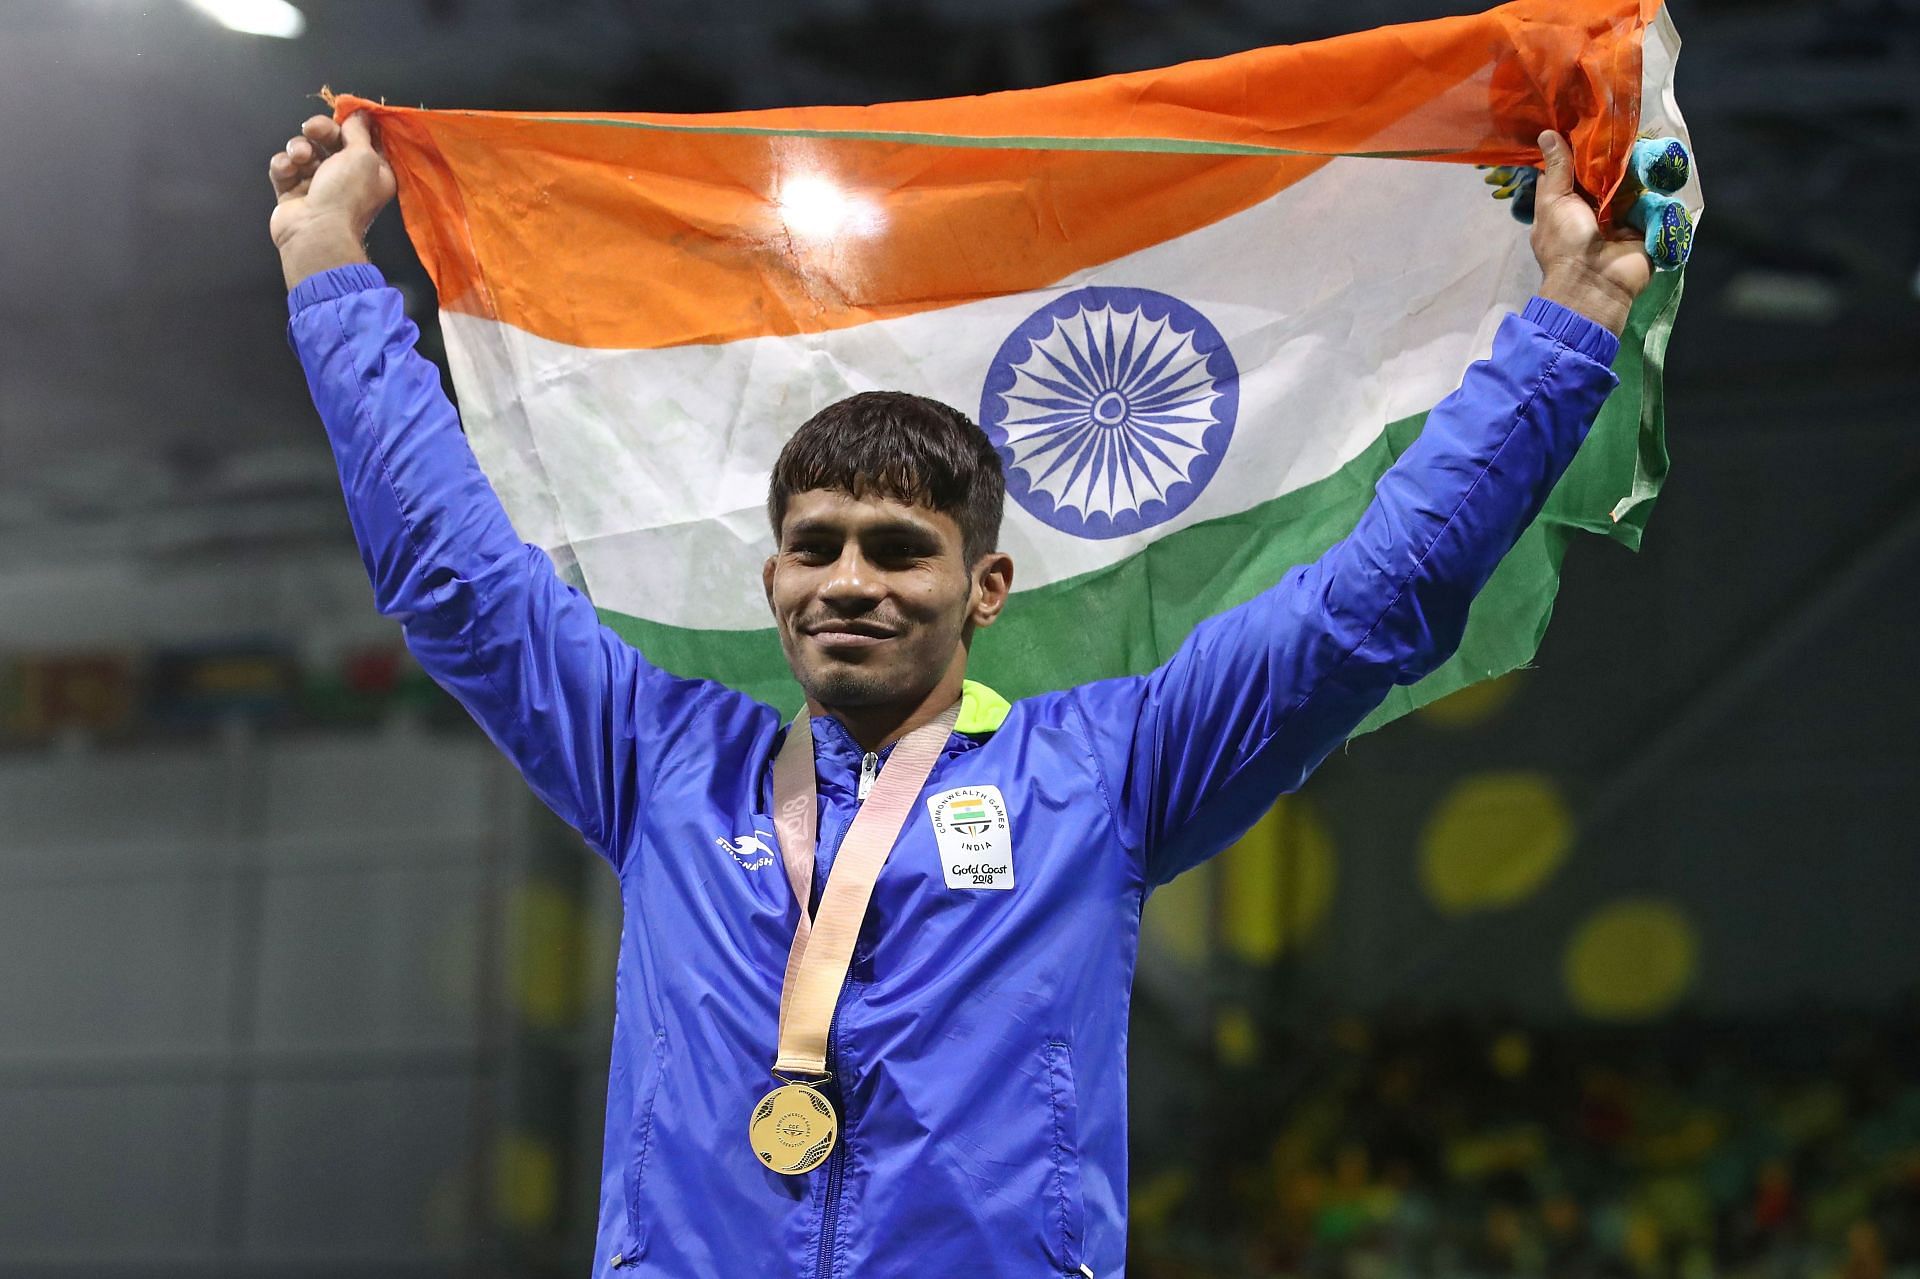 Rahul Aware won bronze medal at 2019 world championship.